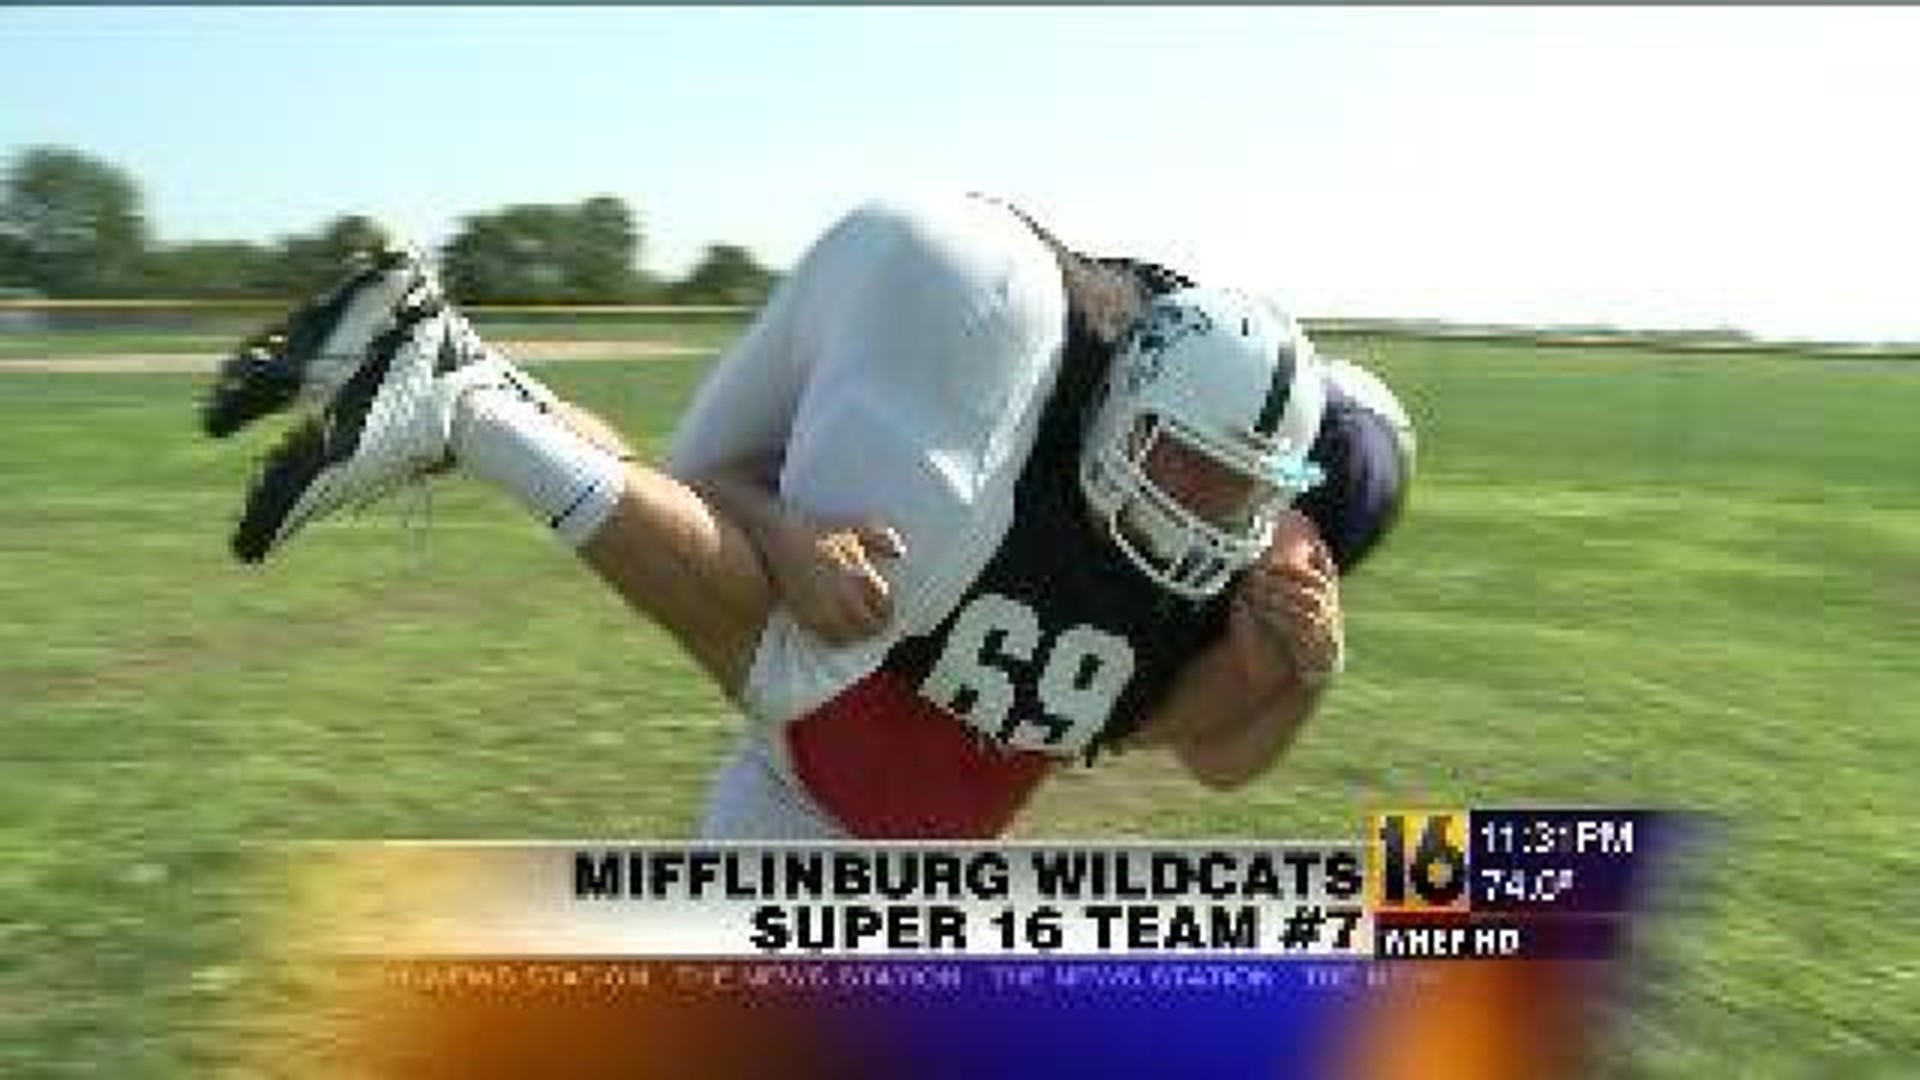 Mifflinburg Wildcats Super 16 Team #7